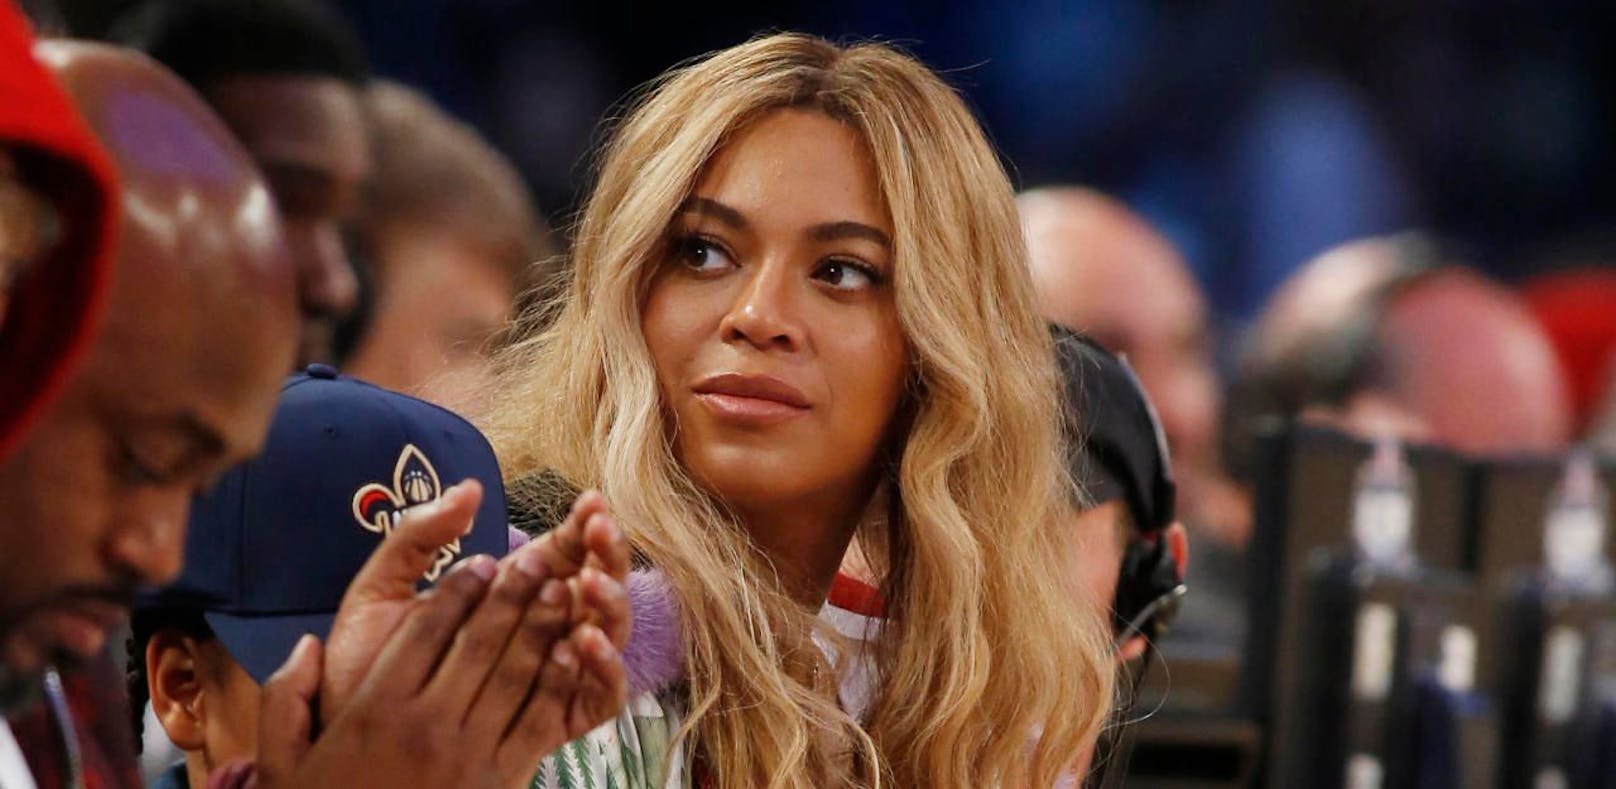 Beyoncé-Zwillinge sollen an Gelbsucht leiden